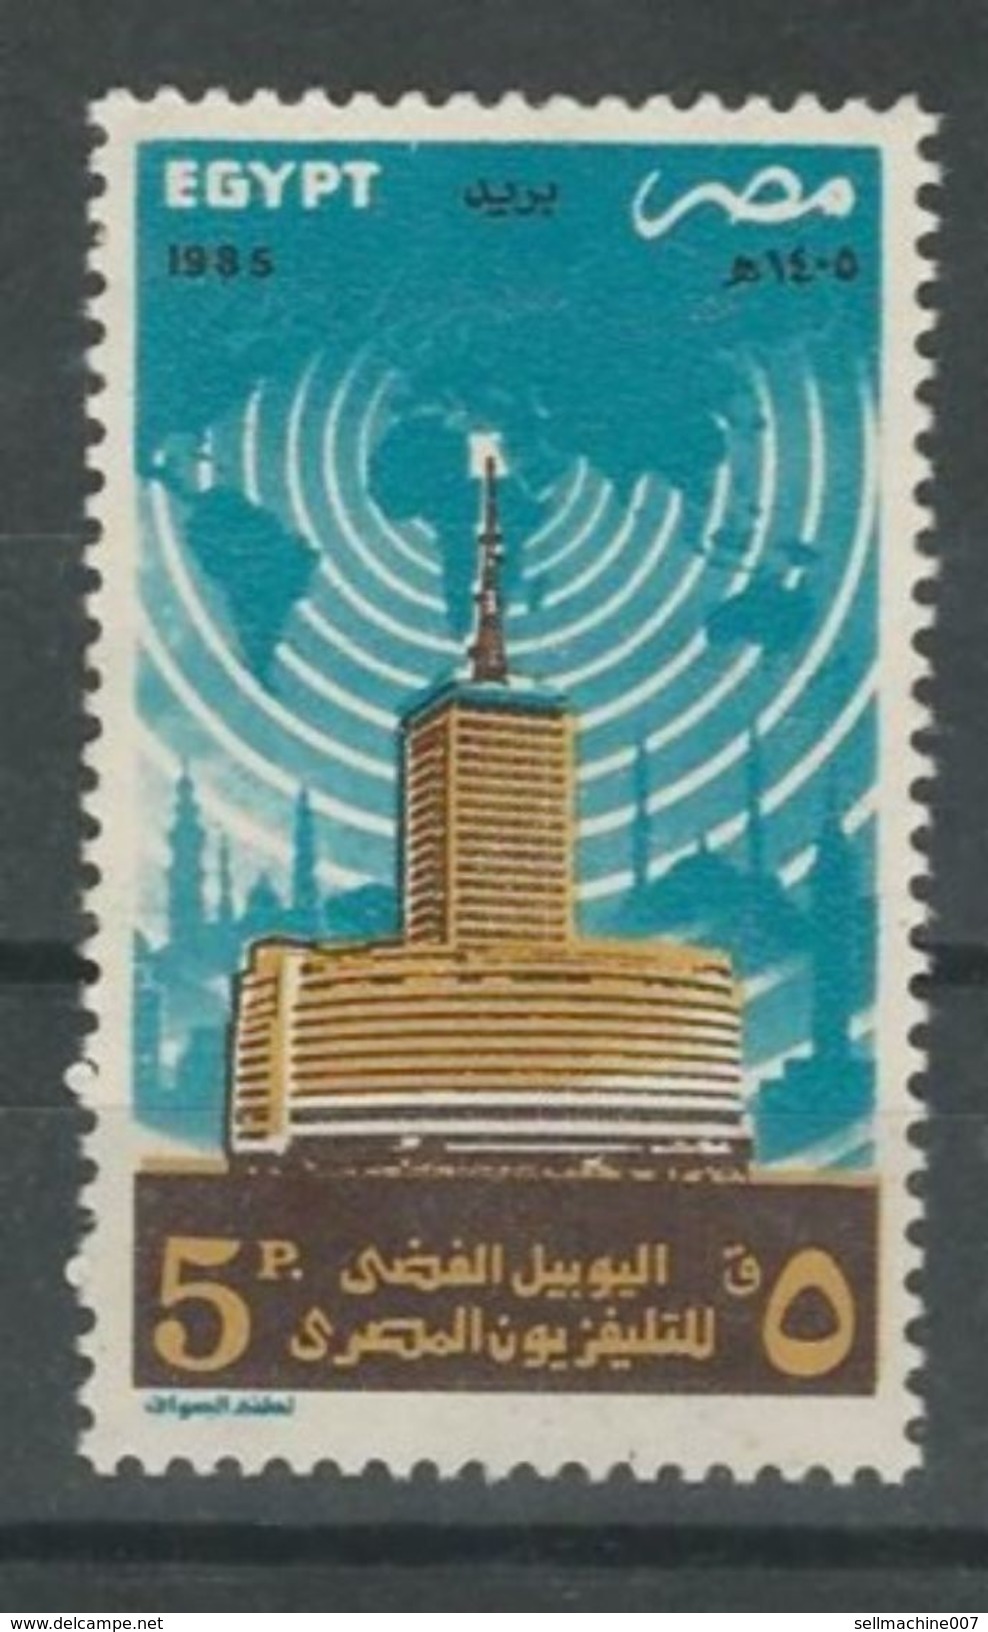 EGYPT 1985 Stamp Egyptian Television MNH **  - Egypt TV Silver Jubilee 1960 - 1985 STAMP - Oblitérés